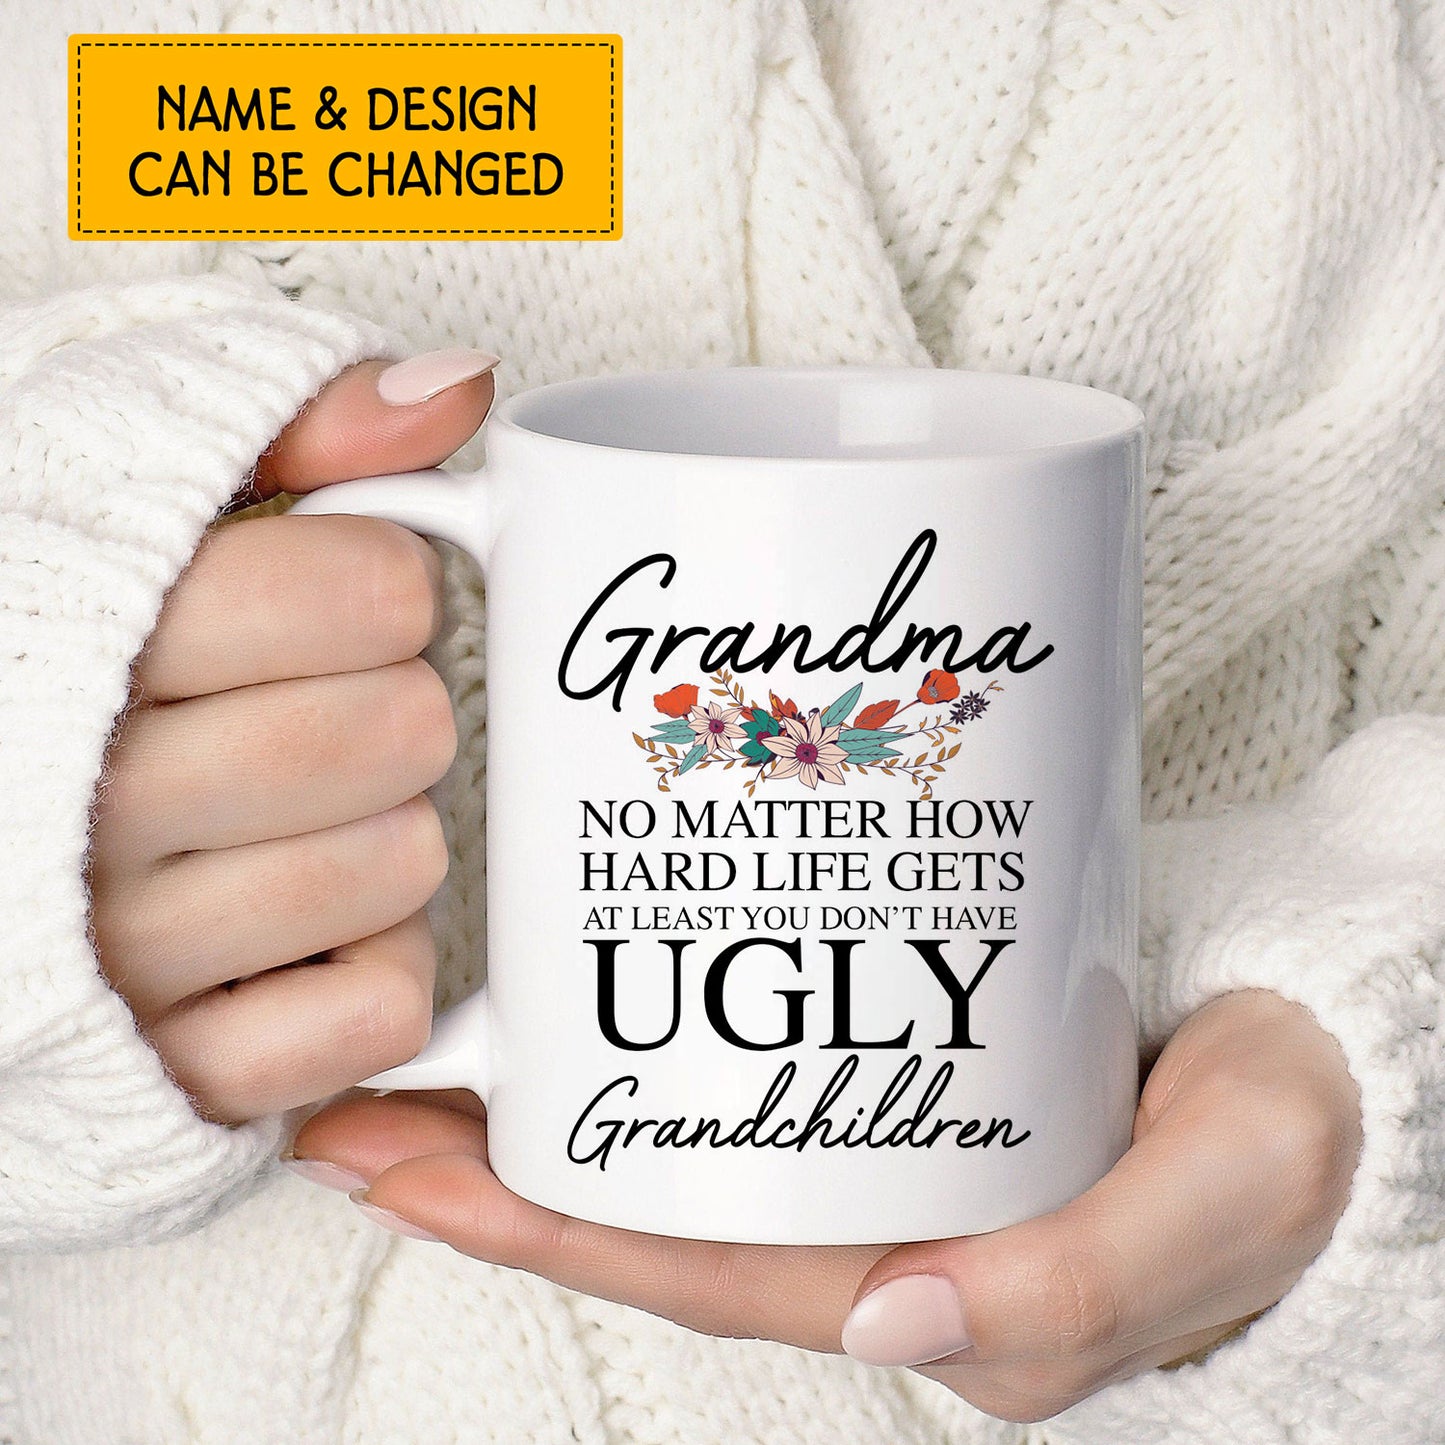 Grandma No Matter How Hard Life Gets At Least You Don't Have Ugly Grandchildren Custom Mug